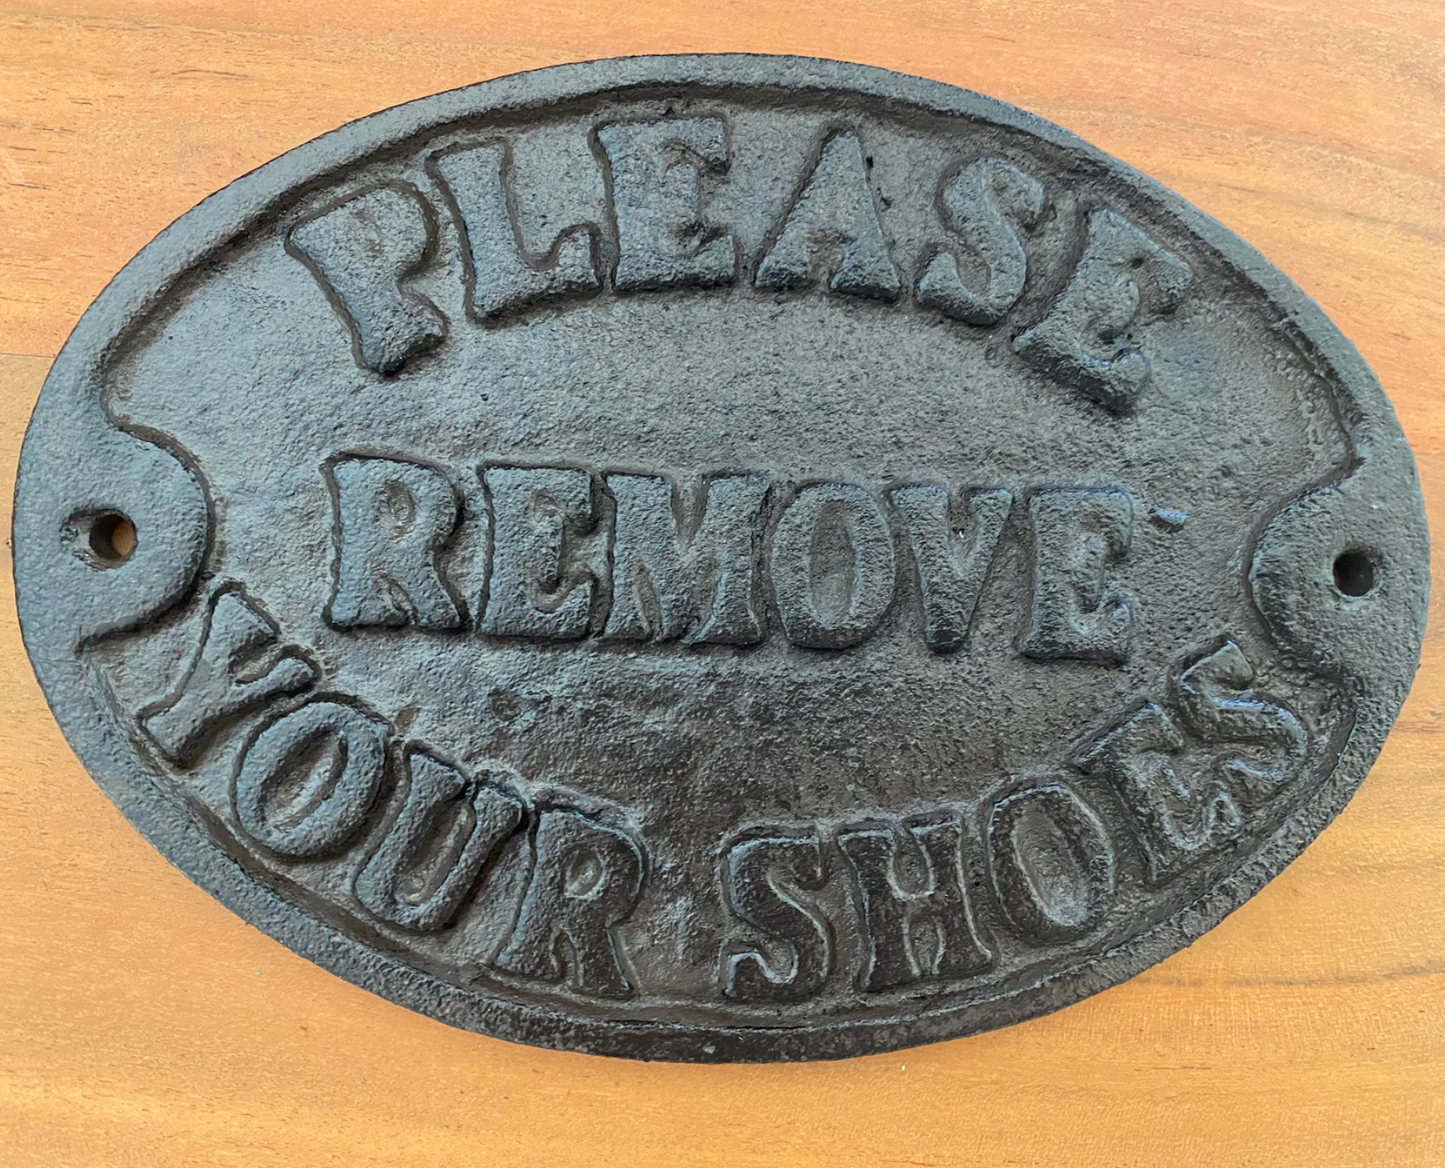 Please remove shoes cast iron sign